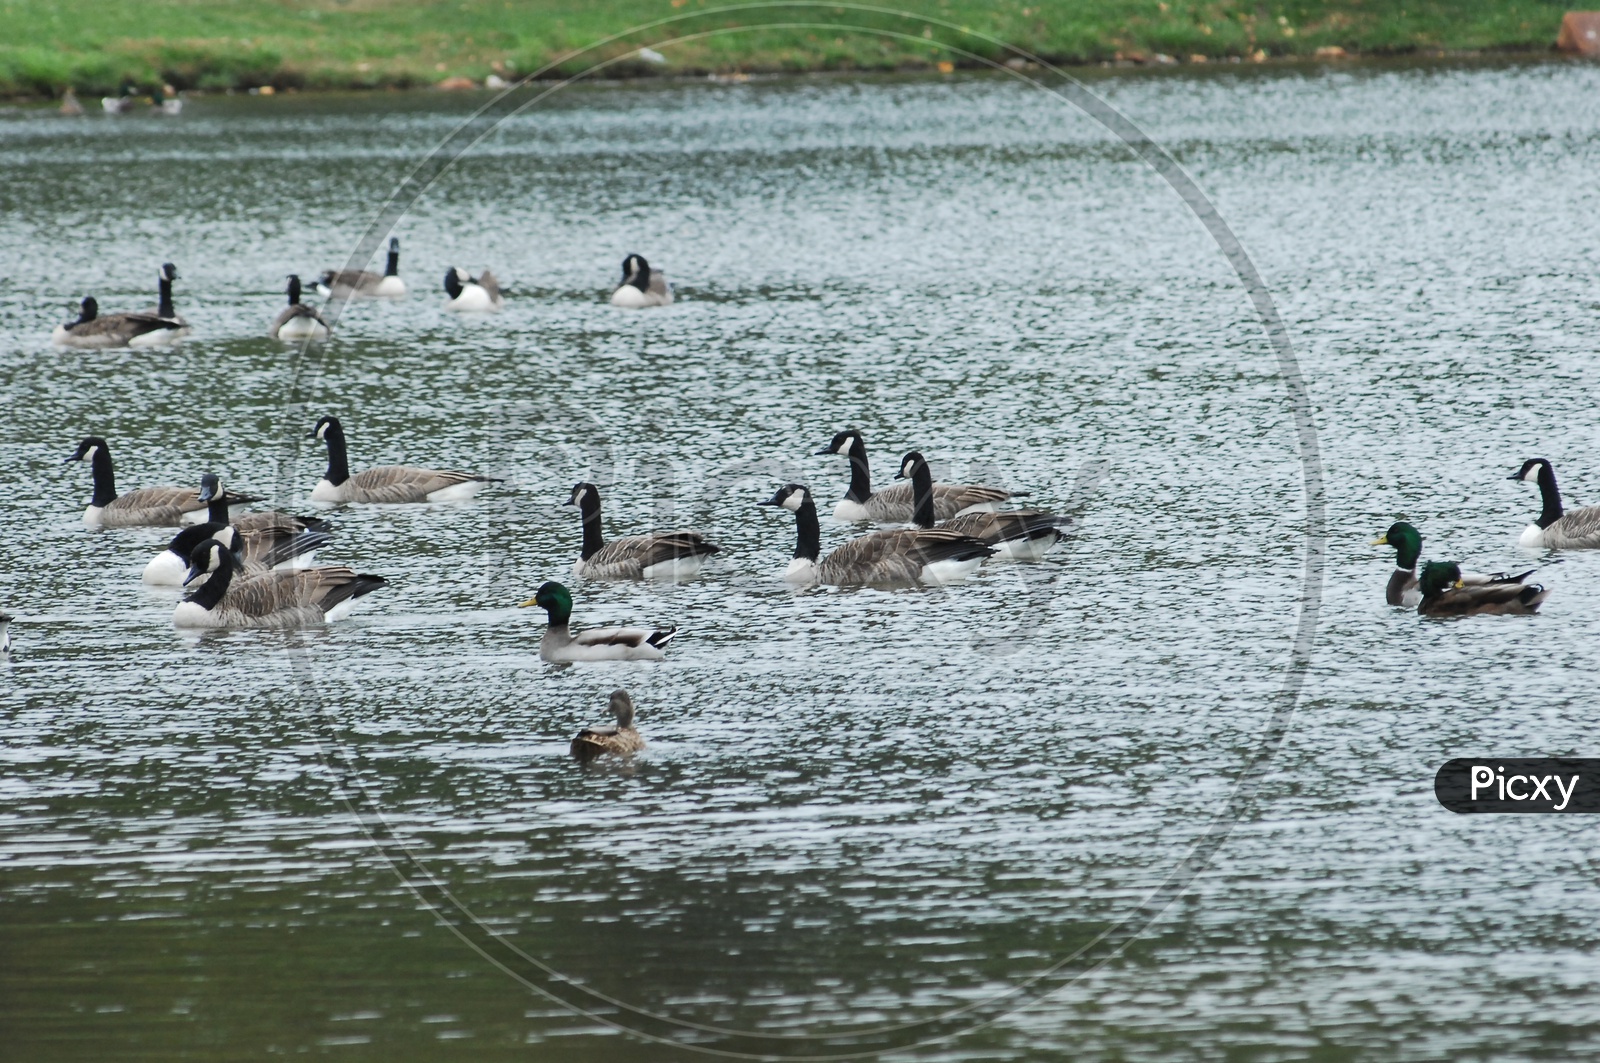 ducks sailing in water